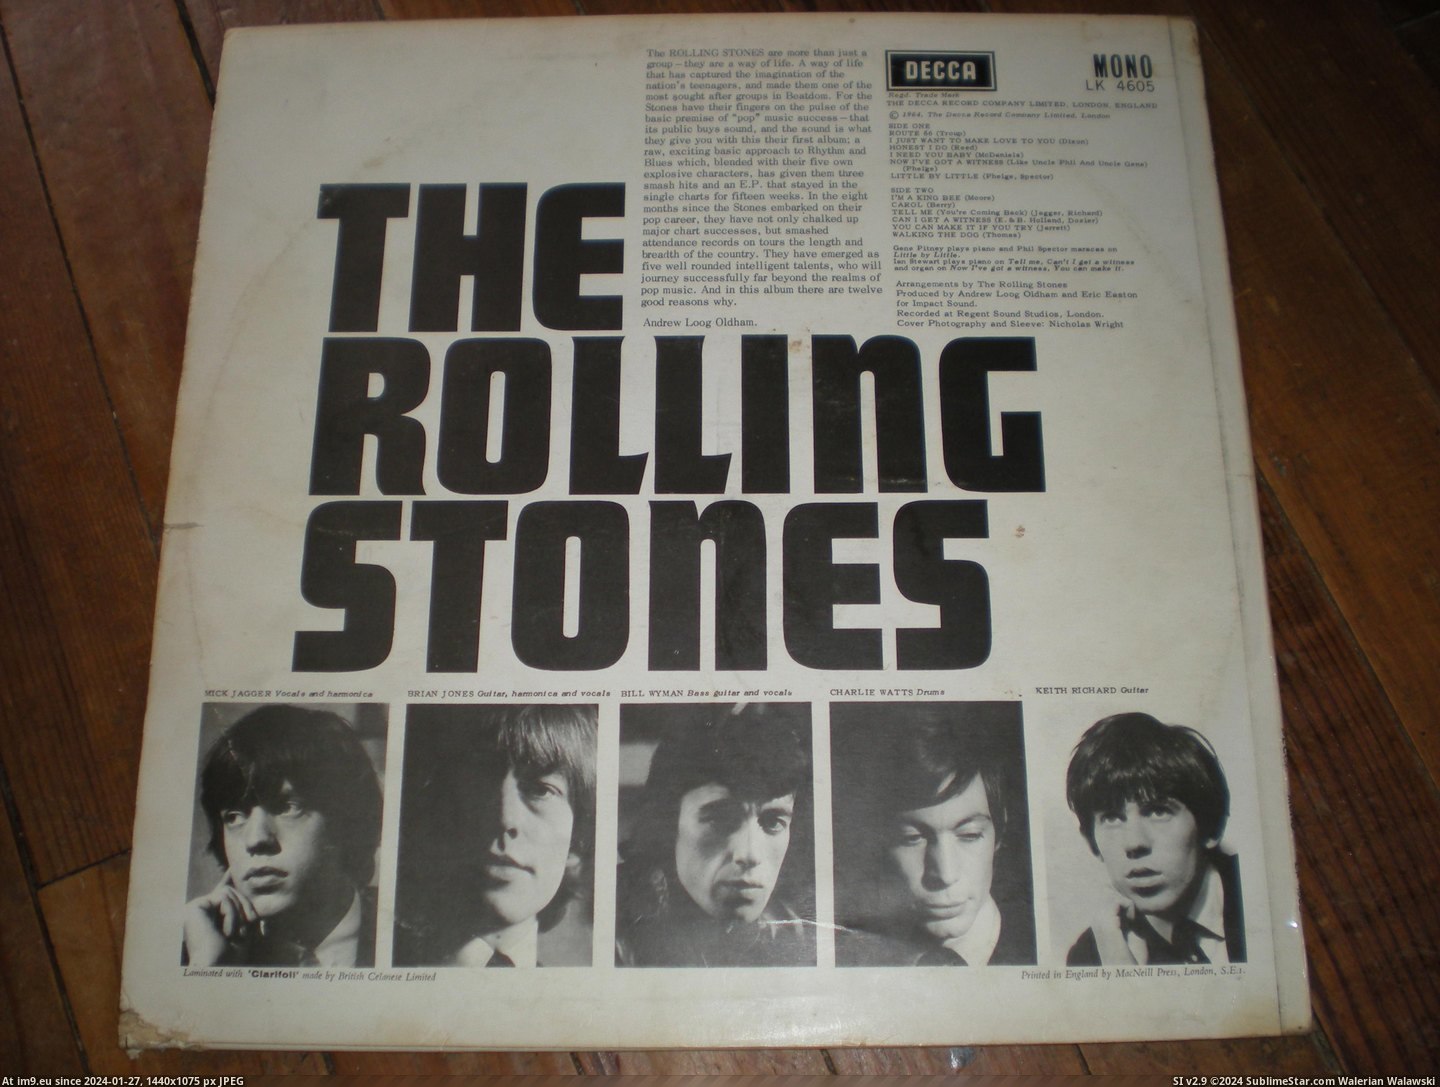 #1st #Boxed #Stones Stones 1st BOXED 6 Pic. (Изображение из альбом new 1))